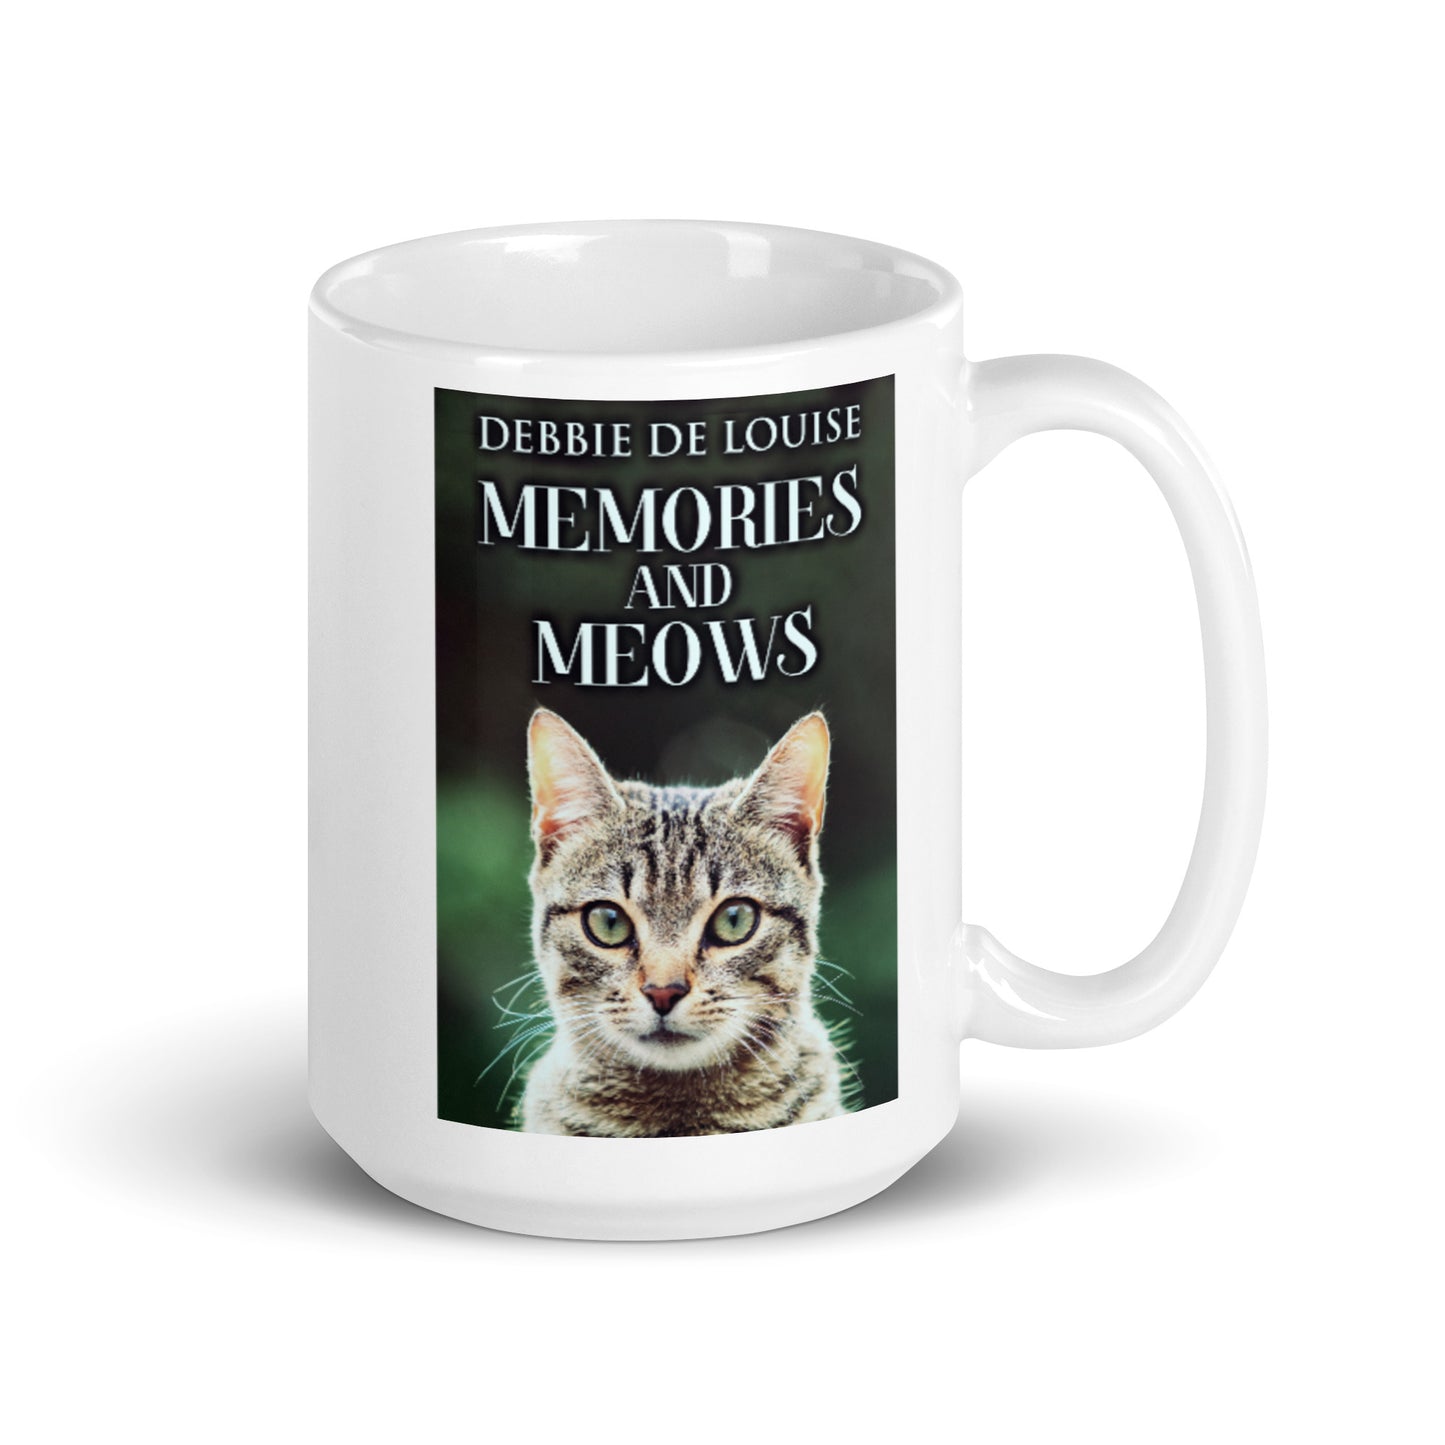 Memories And Meows - White Coffee Mug